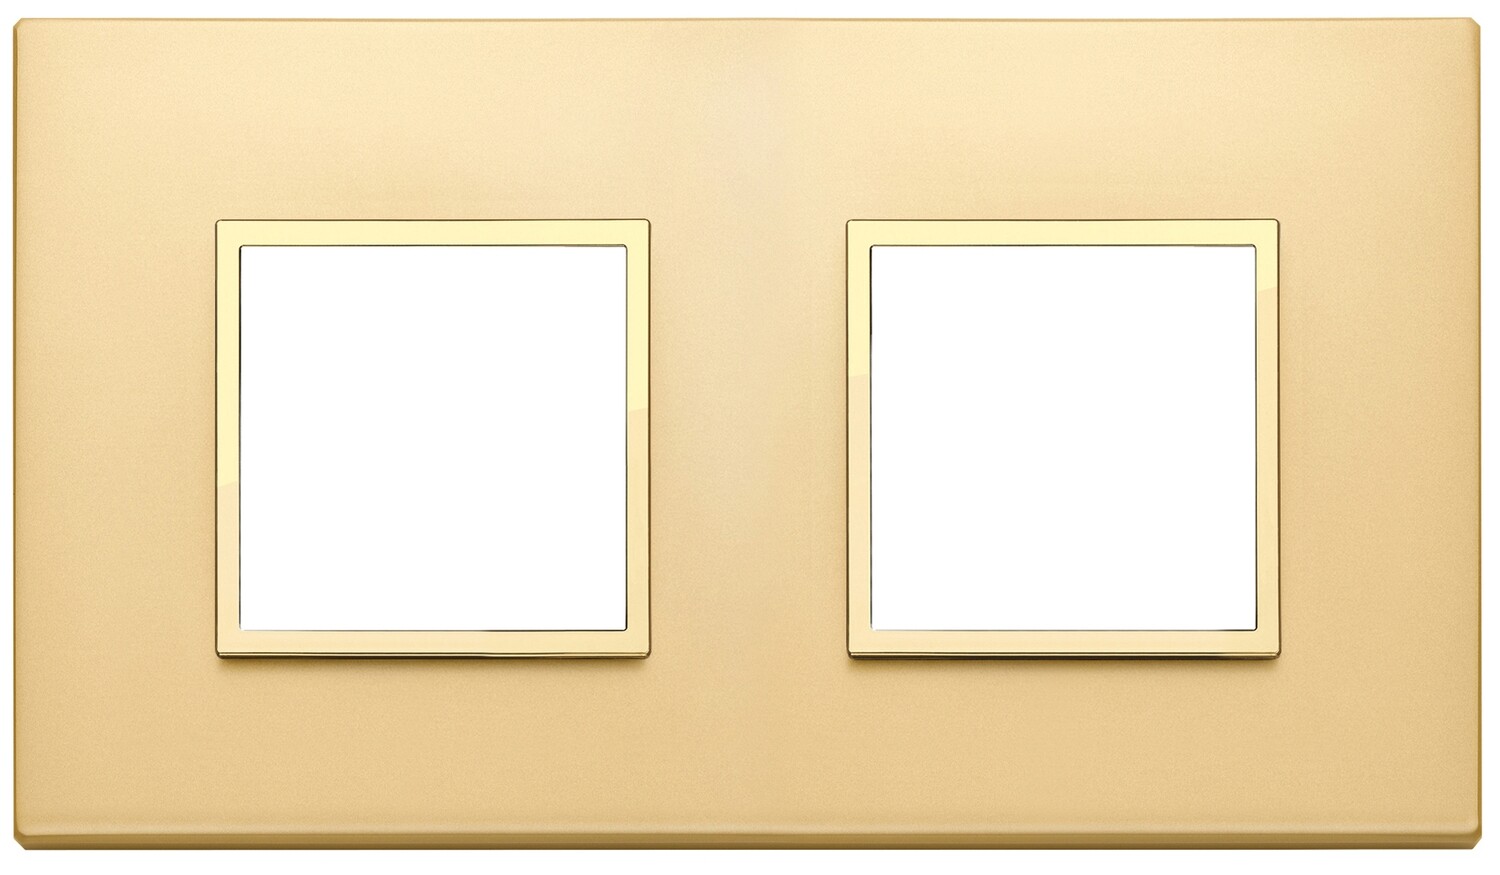 Накладка EVO для 4 модулей (2+2) расстояние между центрами 71мм, золото сатированное